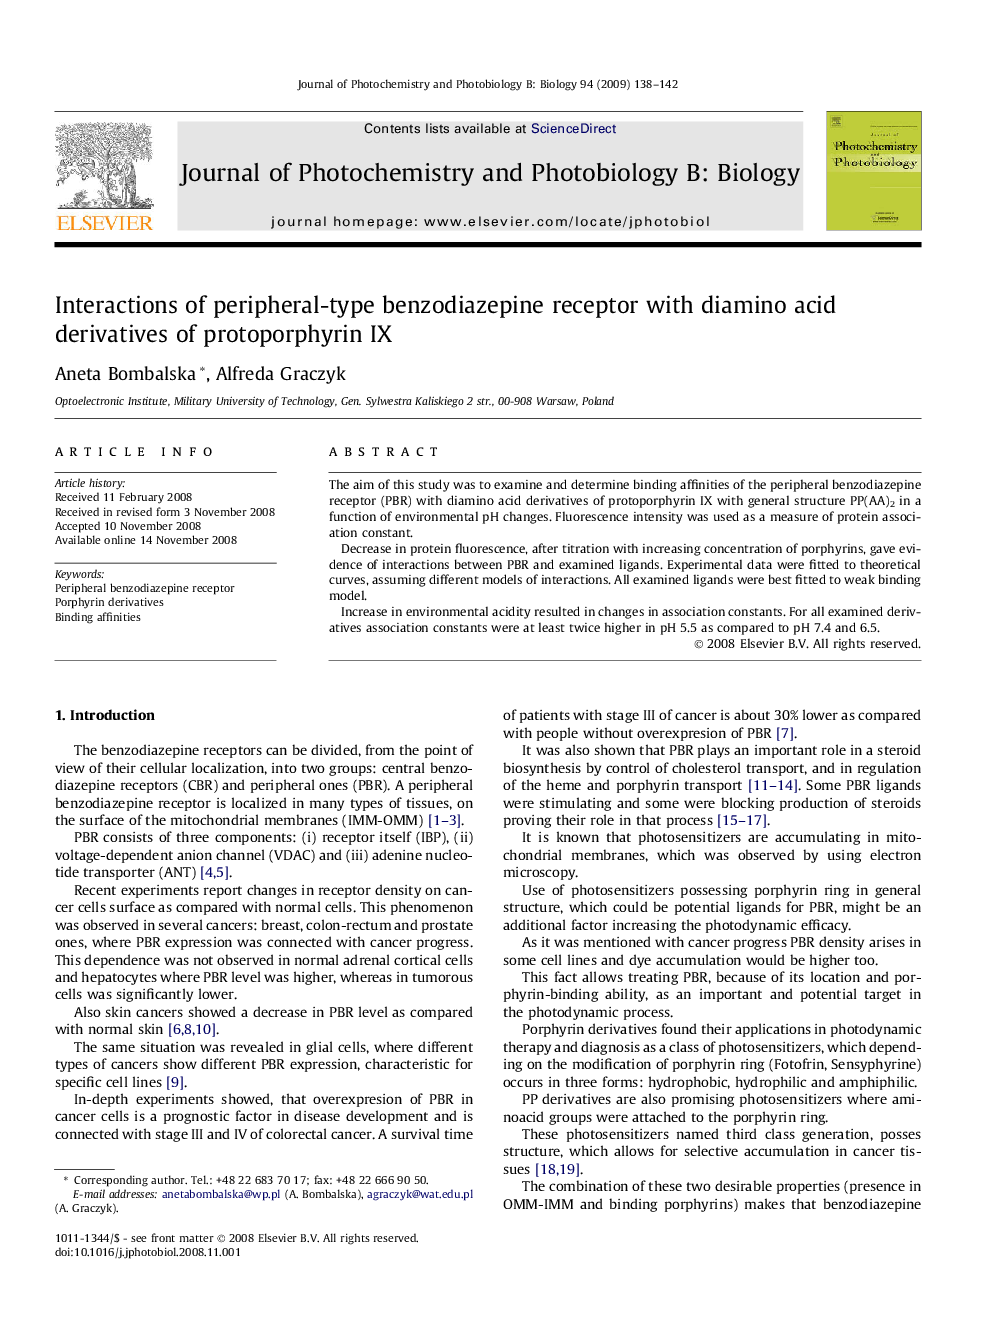 Interactions of peripheral-type benzodiazepine receptor with diamino acid derivatives of protoporphyrin IX